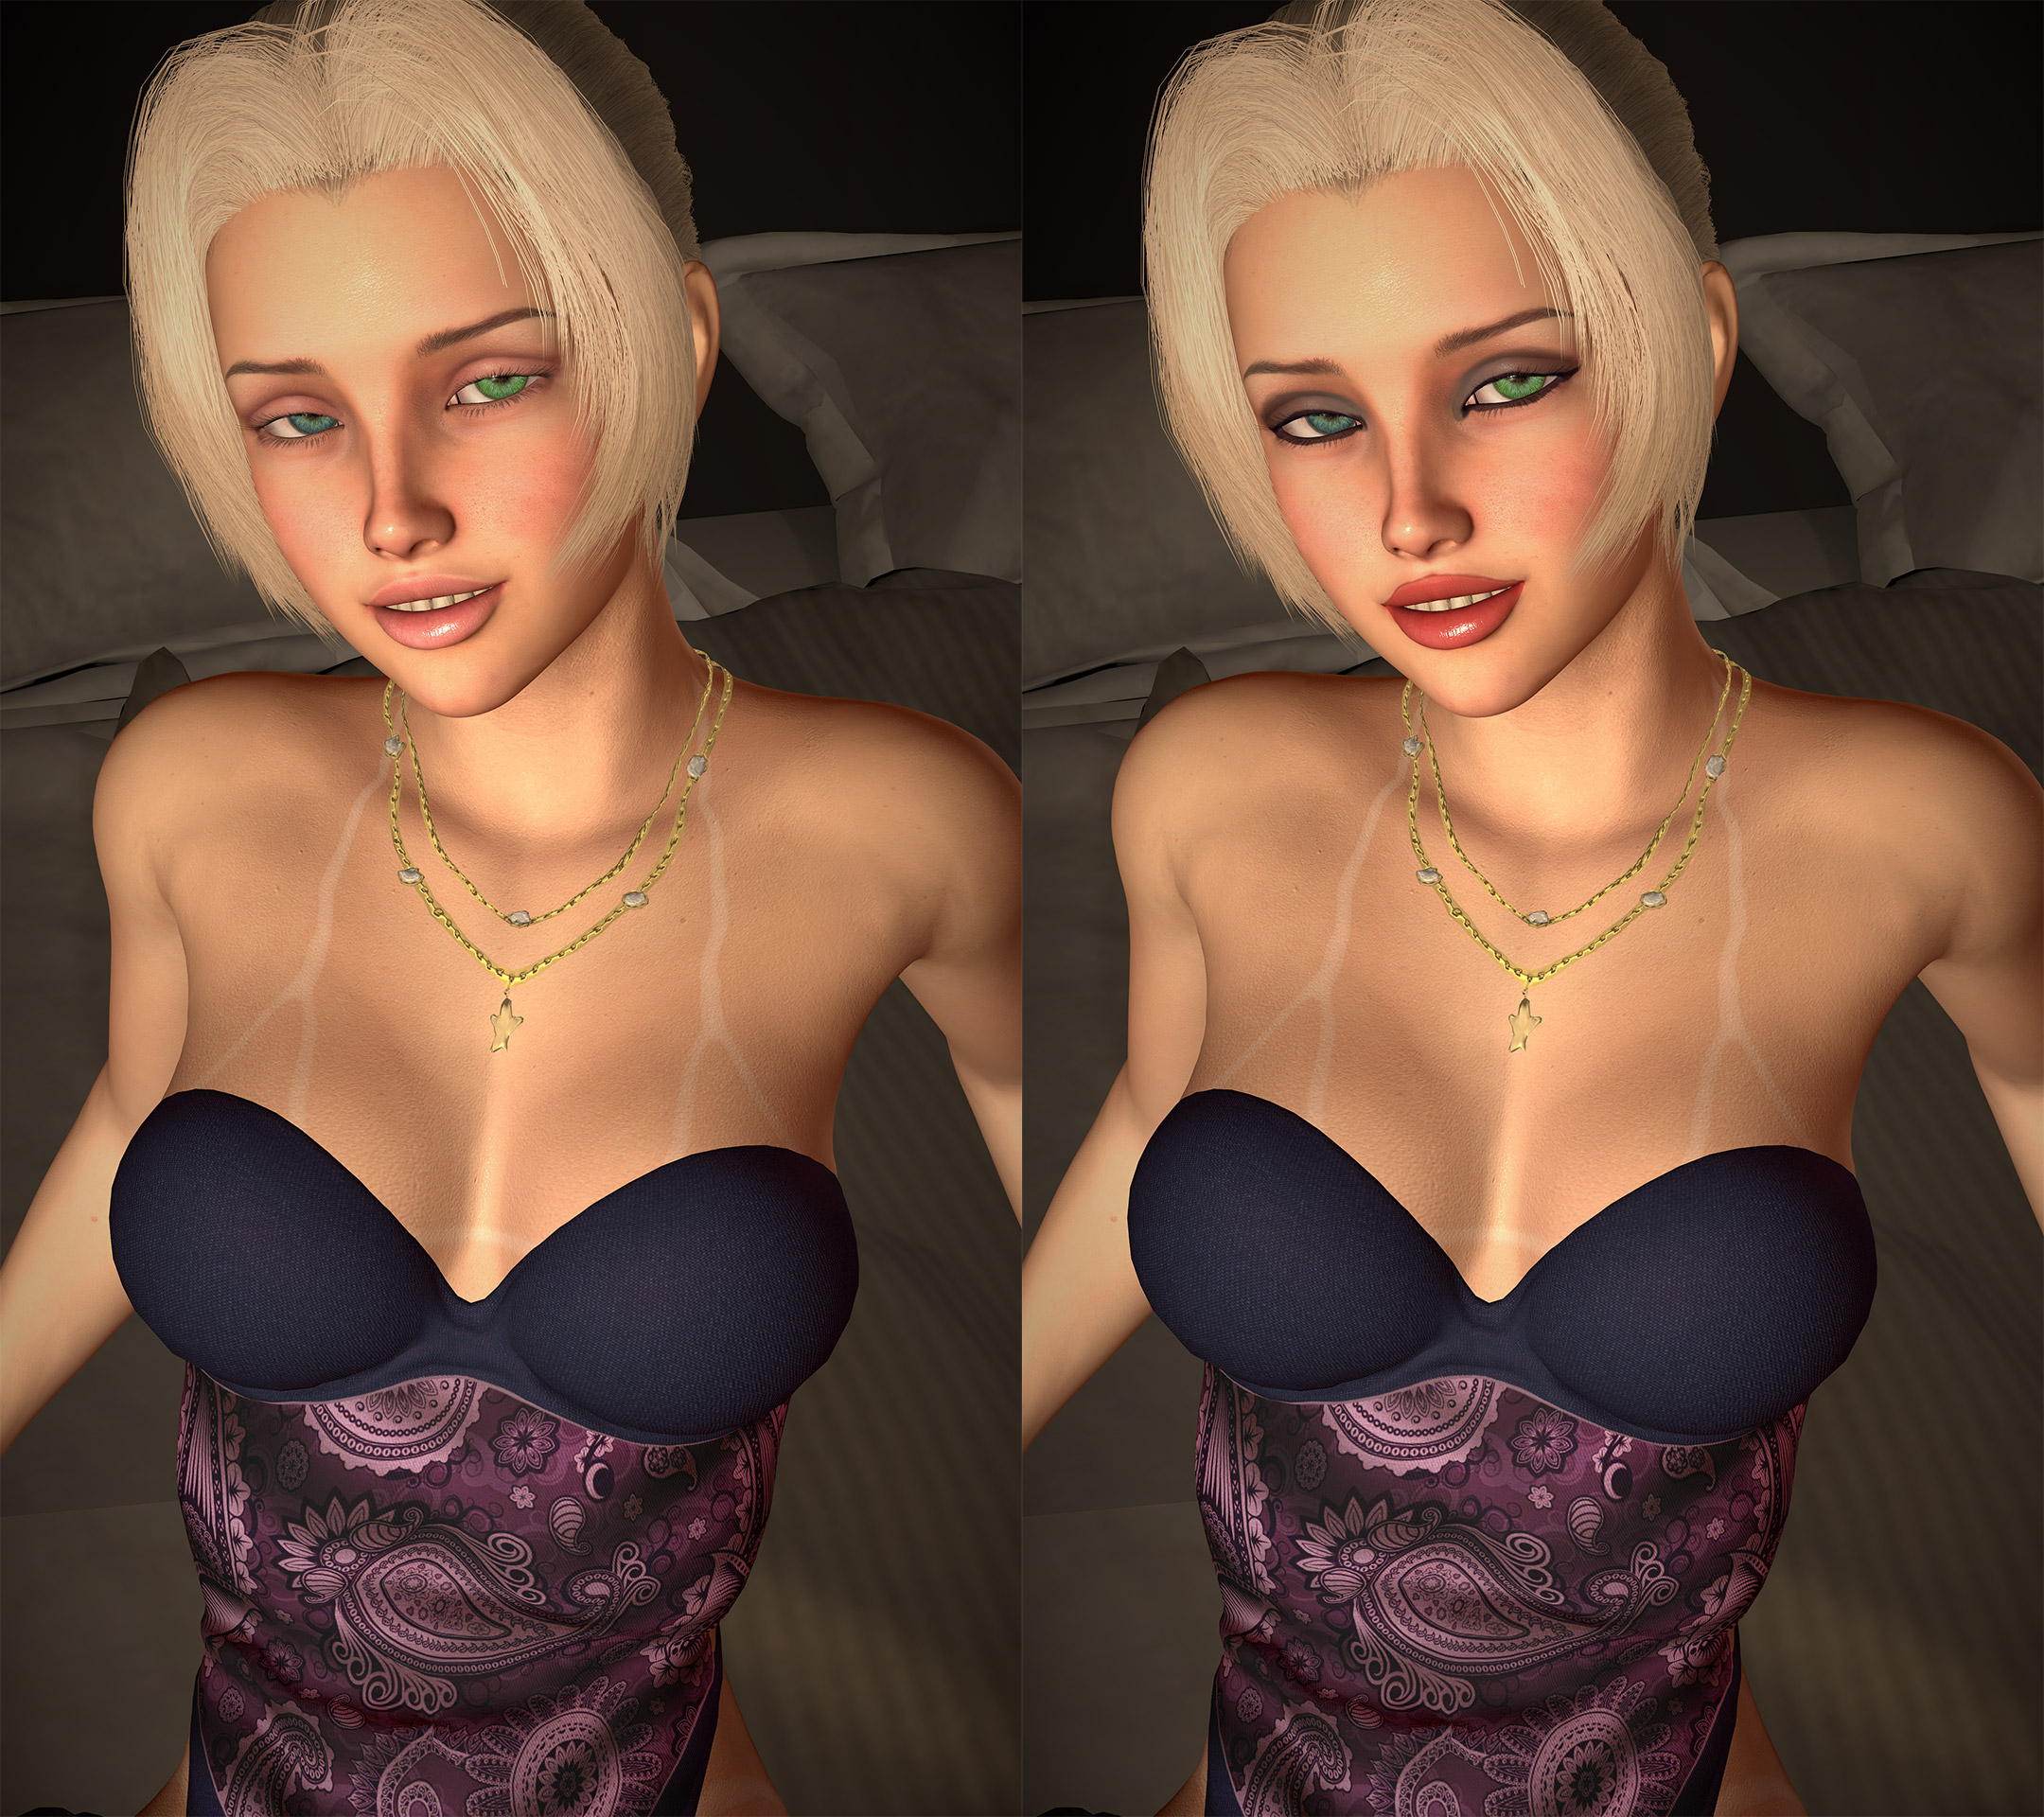 firebyrd-makeup-comparison-1.jpg